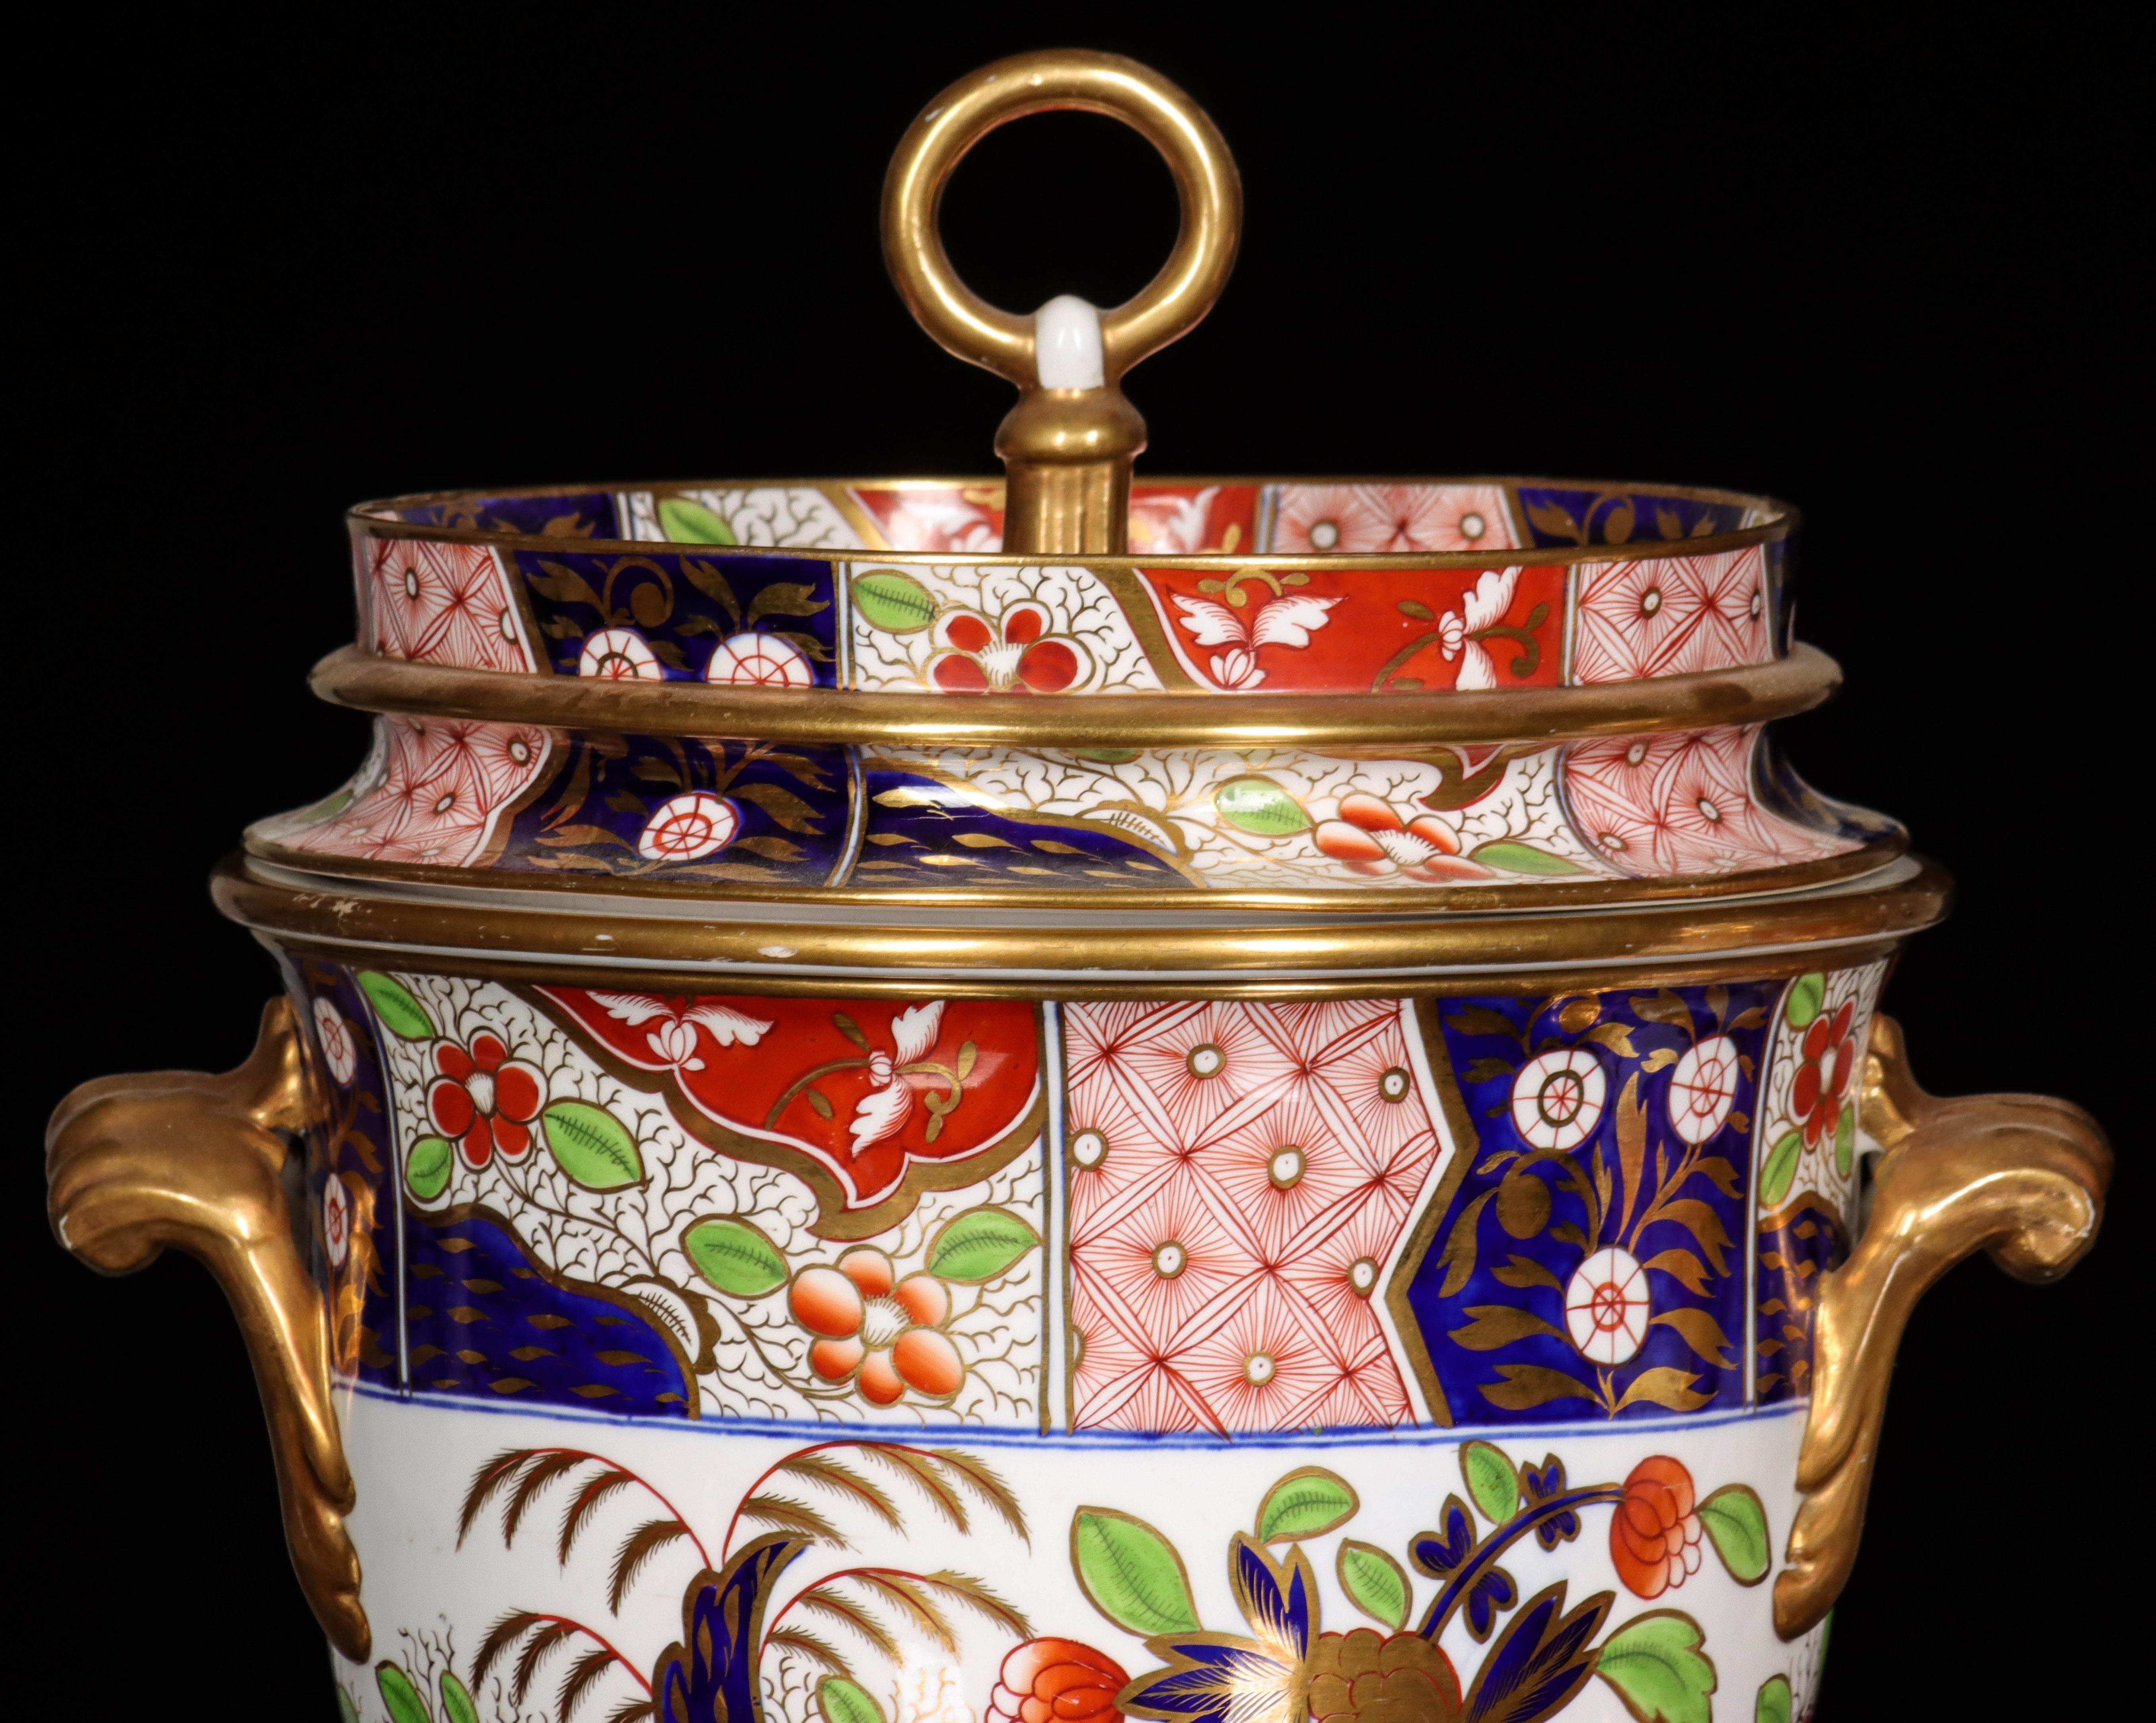 19th Century Regency Spode Porcelain Imari Fruit Coolers, Covers & Liners, Pattern 2957